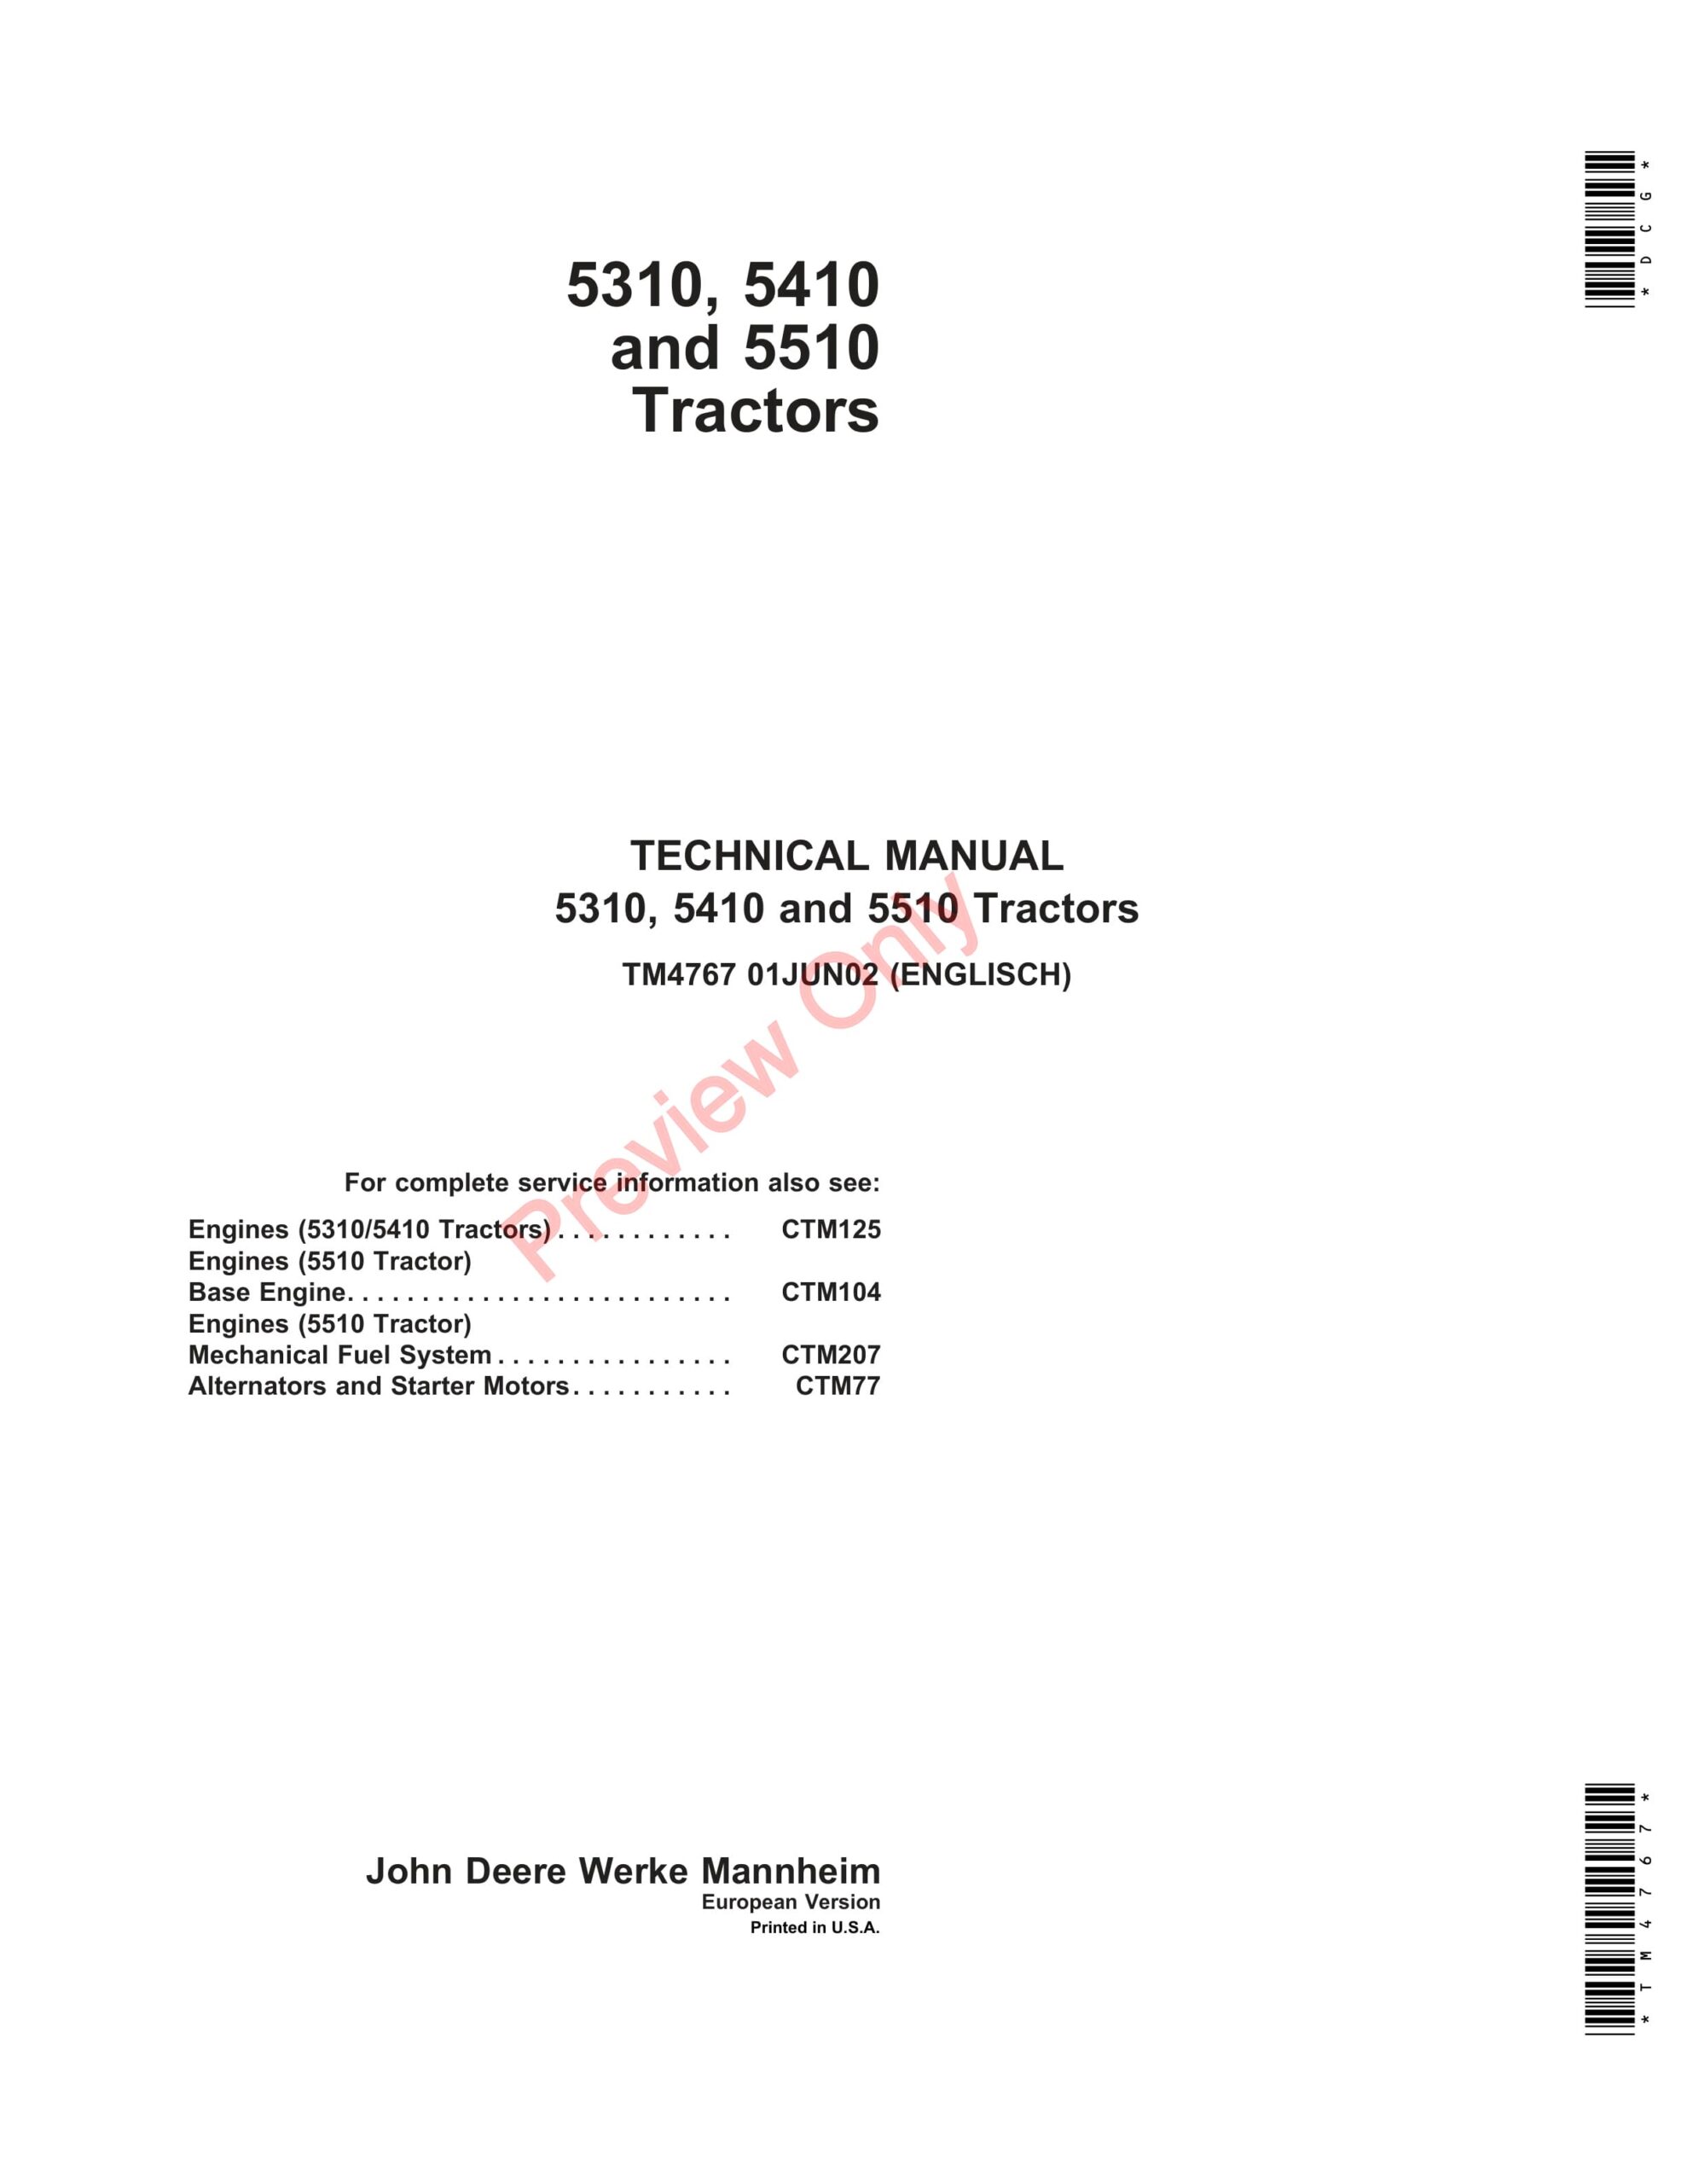 John Deere 5310, 5410 and 5510 Tractors Technical Manual TM4767 01JUN02-1